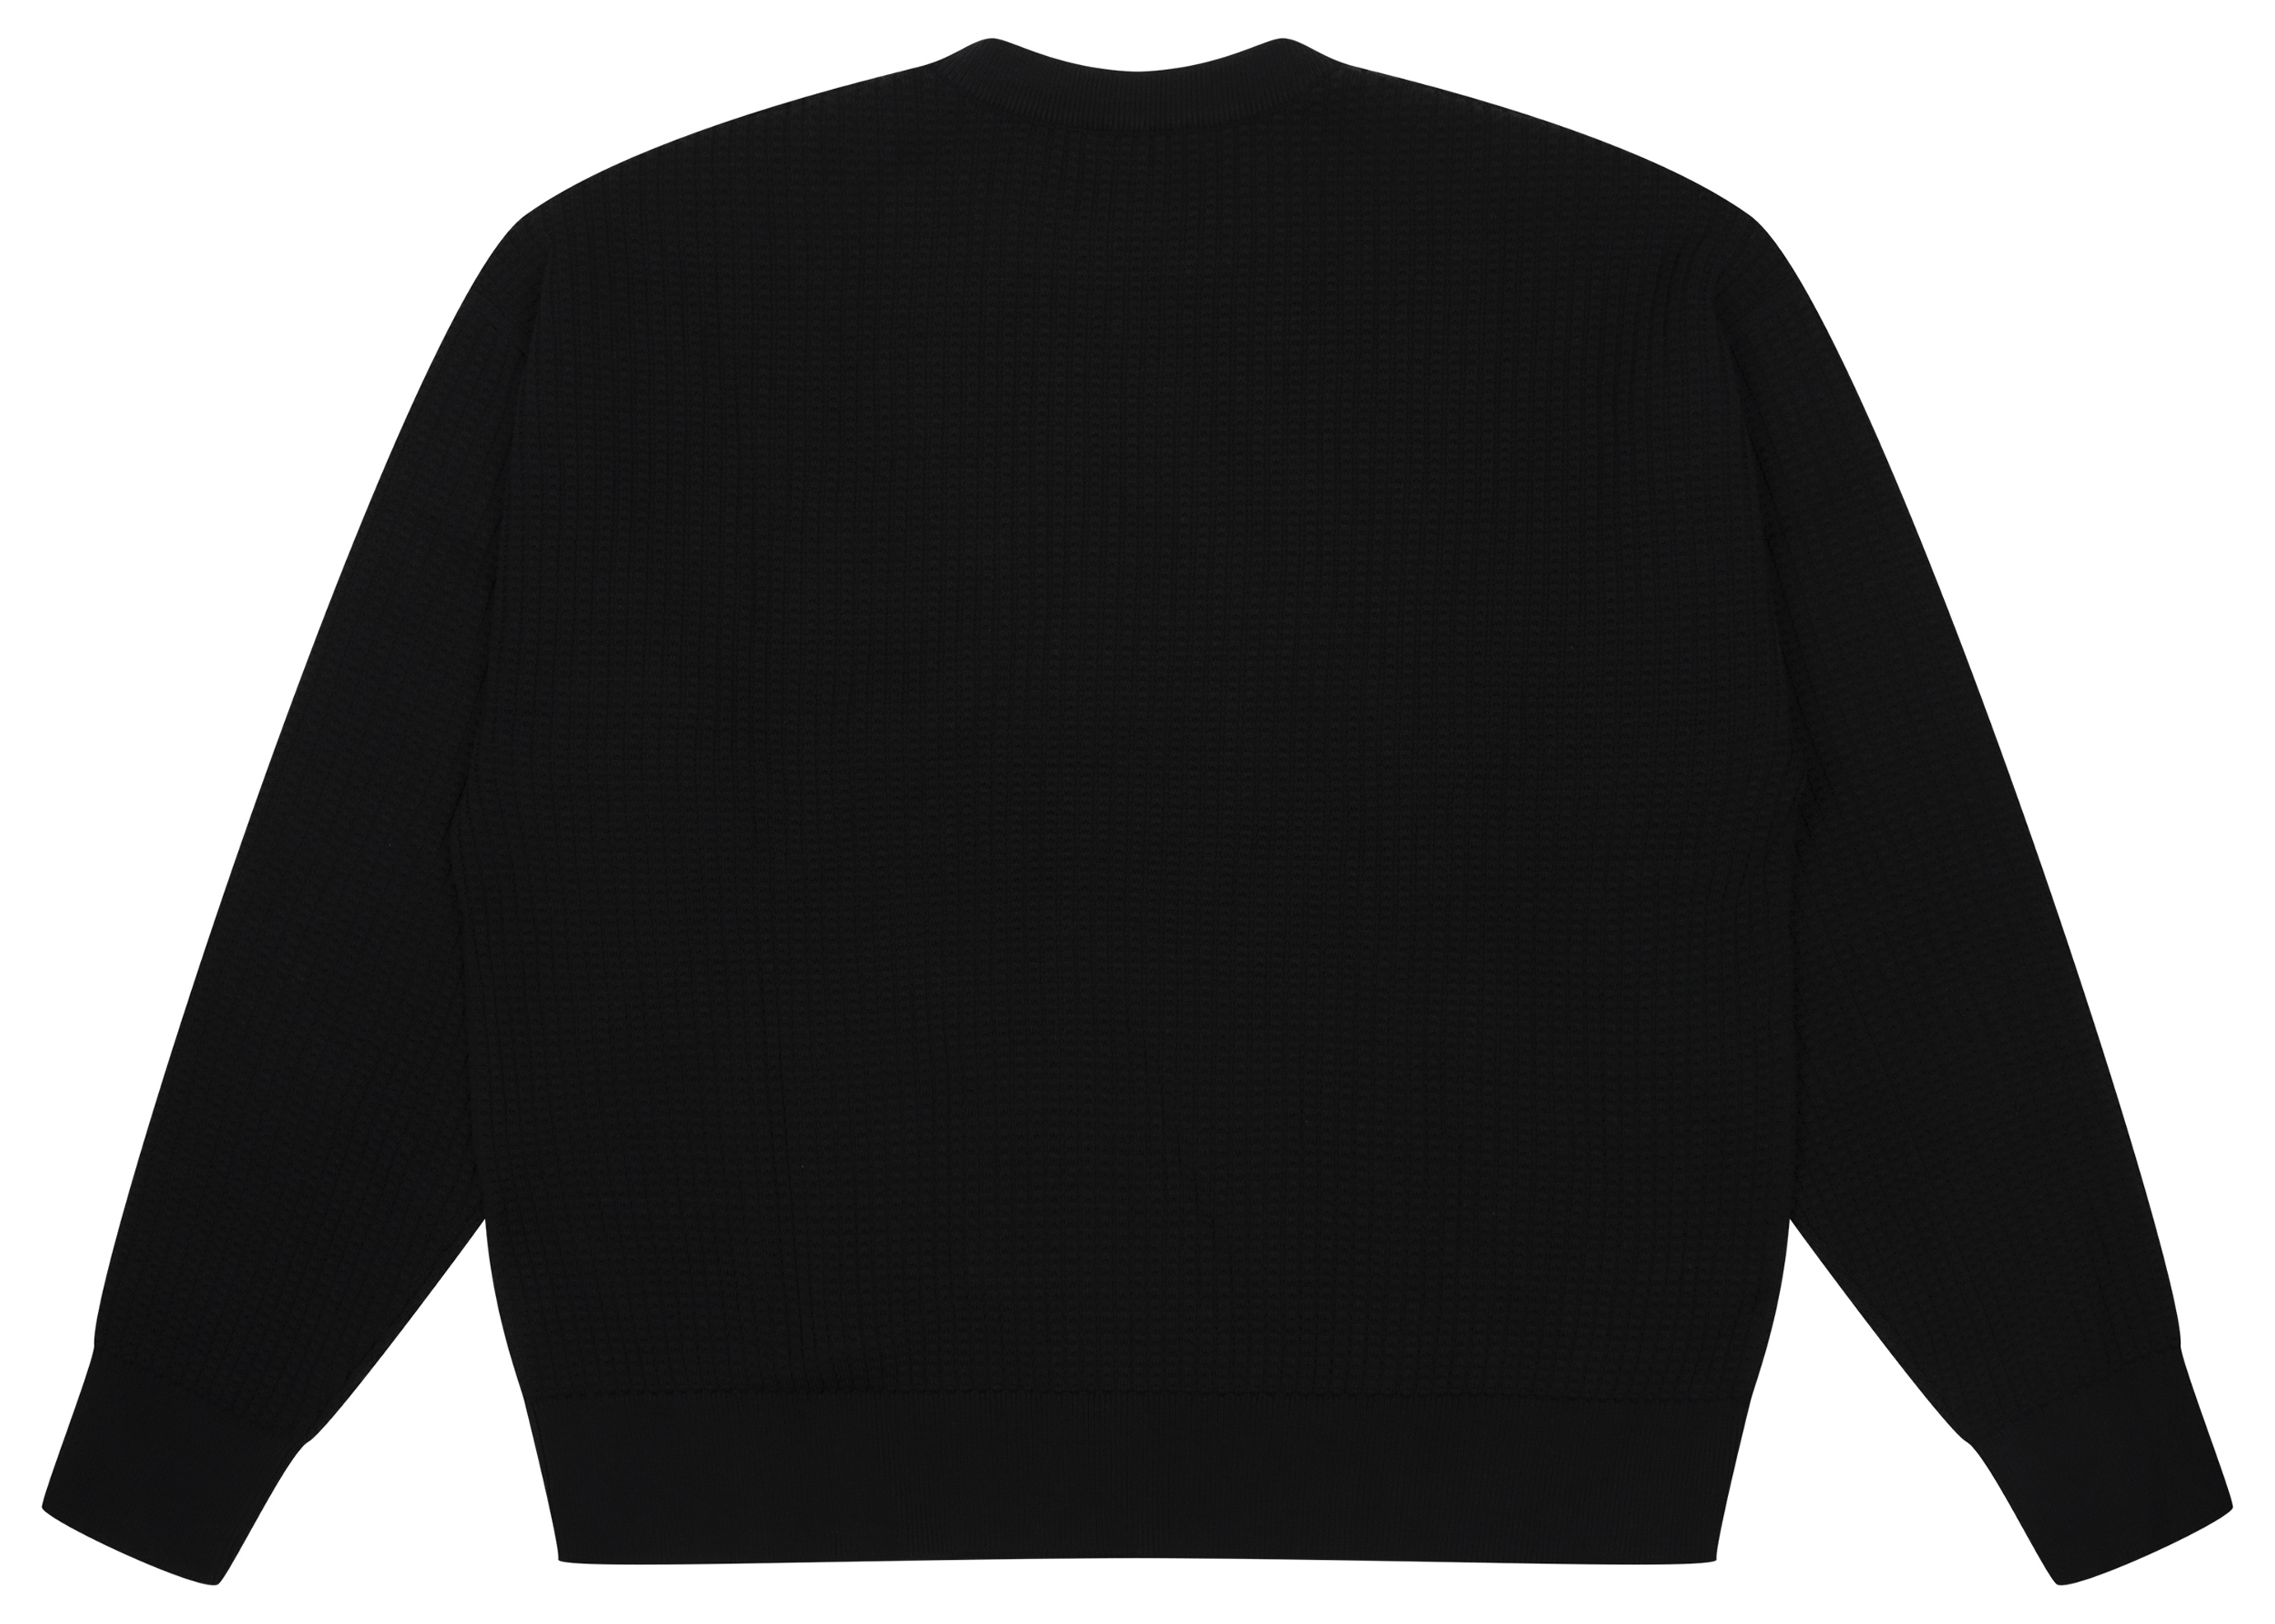 drew house sketch mascot waffle sweater black Men's - FW22 - US